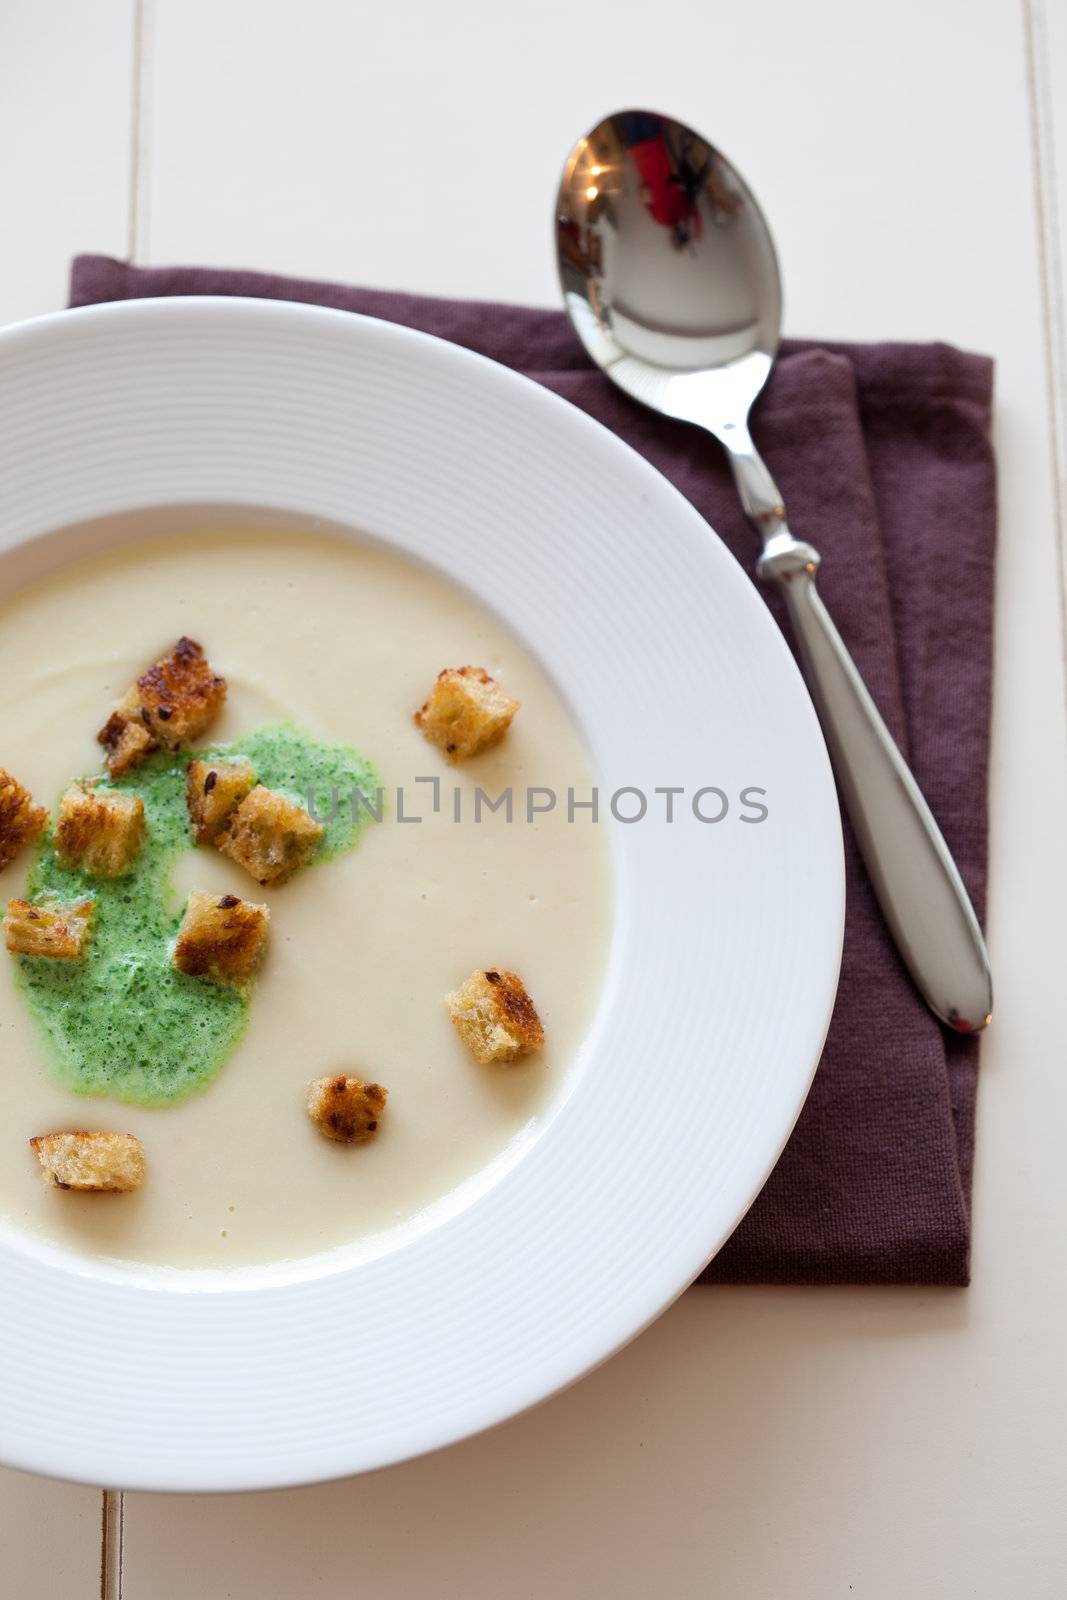 Parsnip soup by Fotosmurf